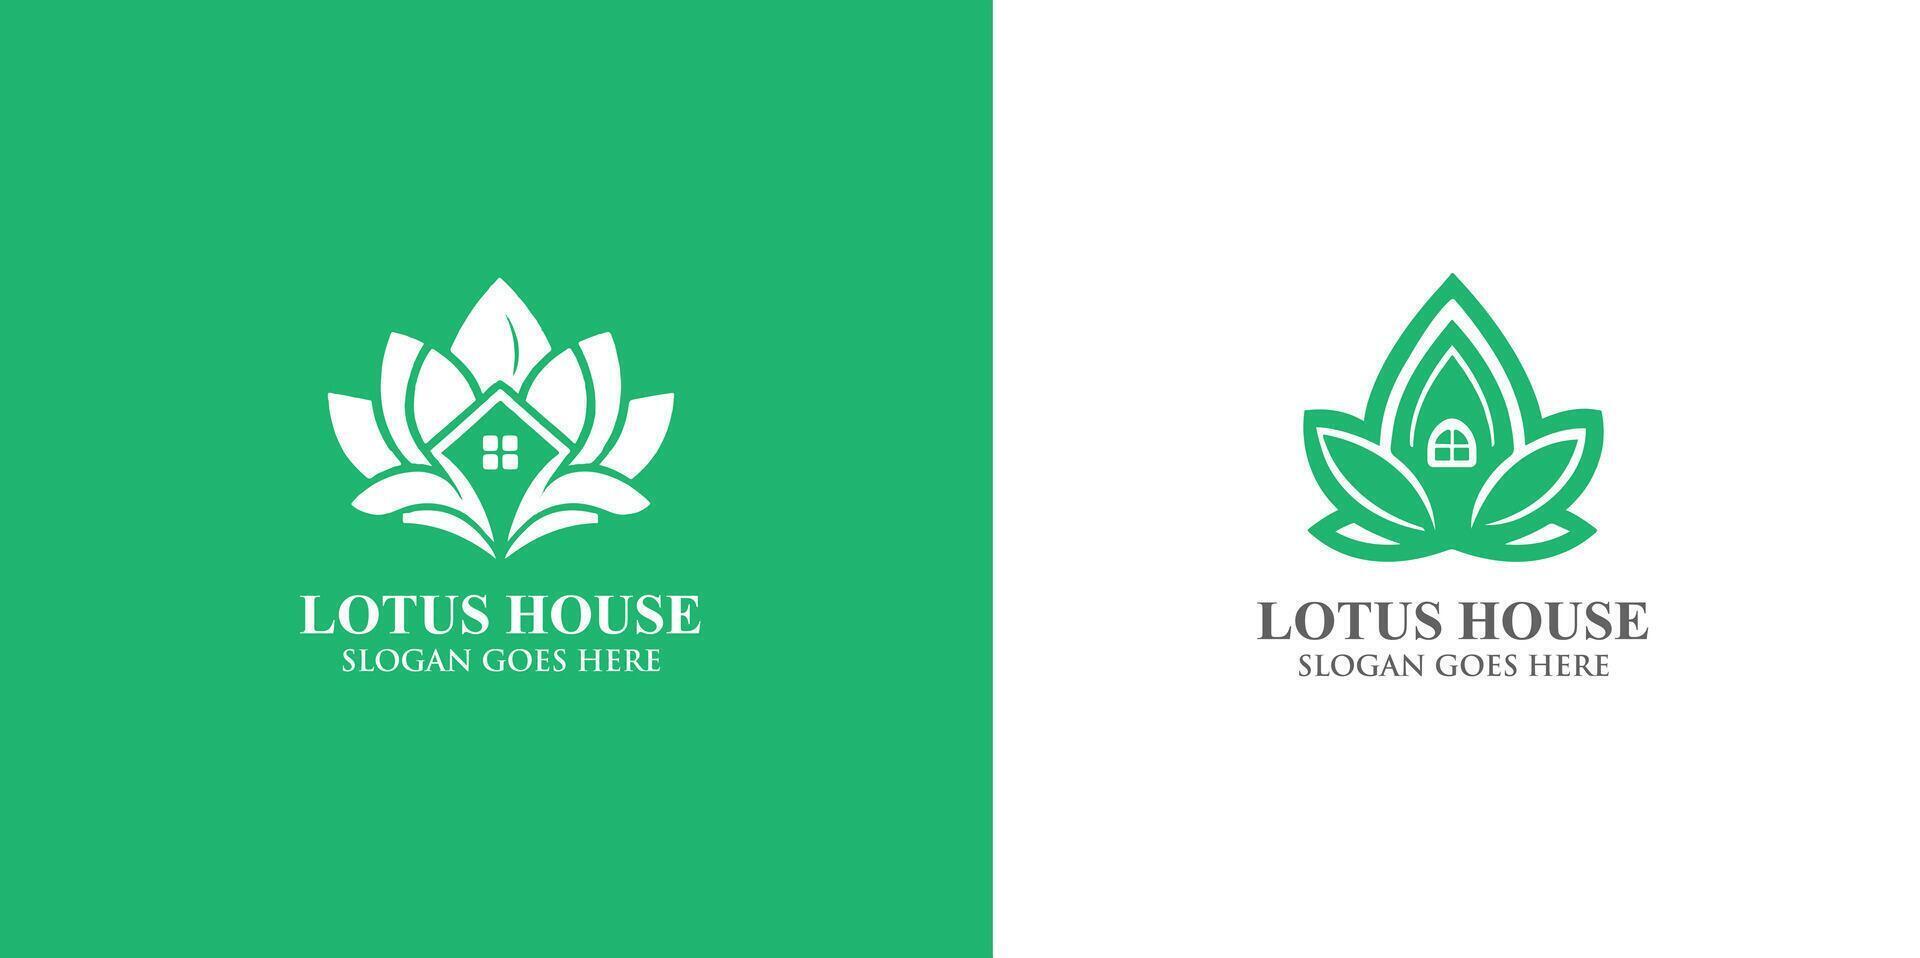 Lotus house logo design with creative concept  free Vector